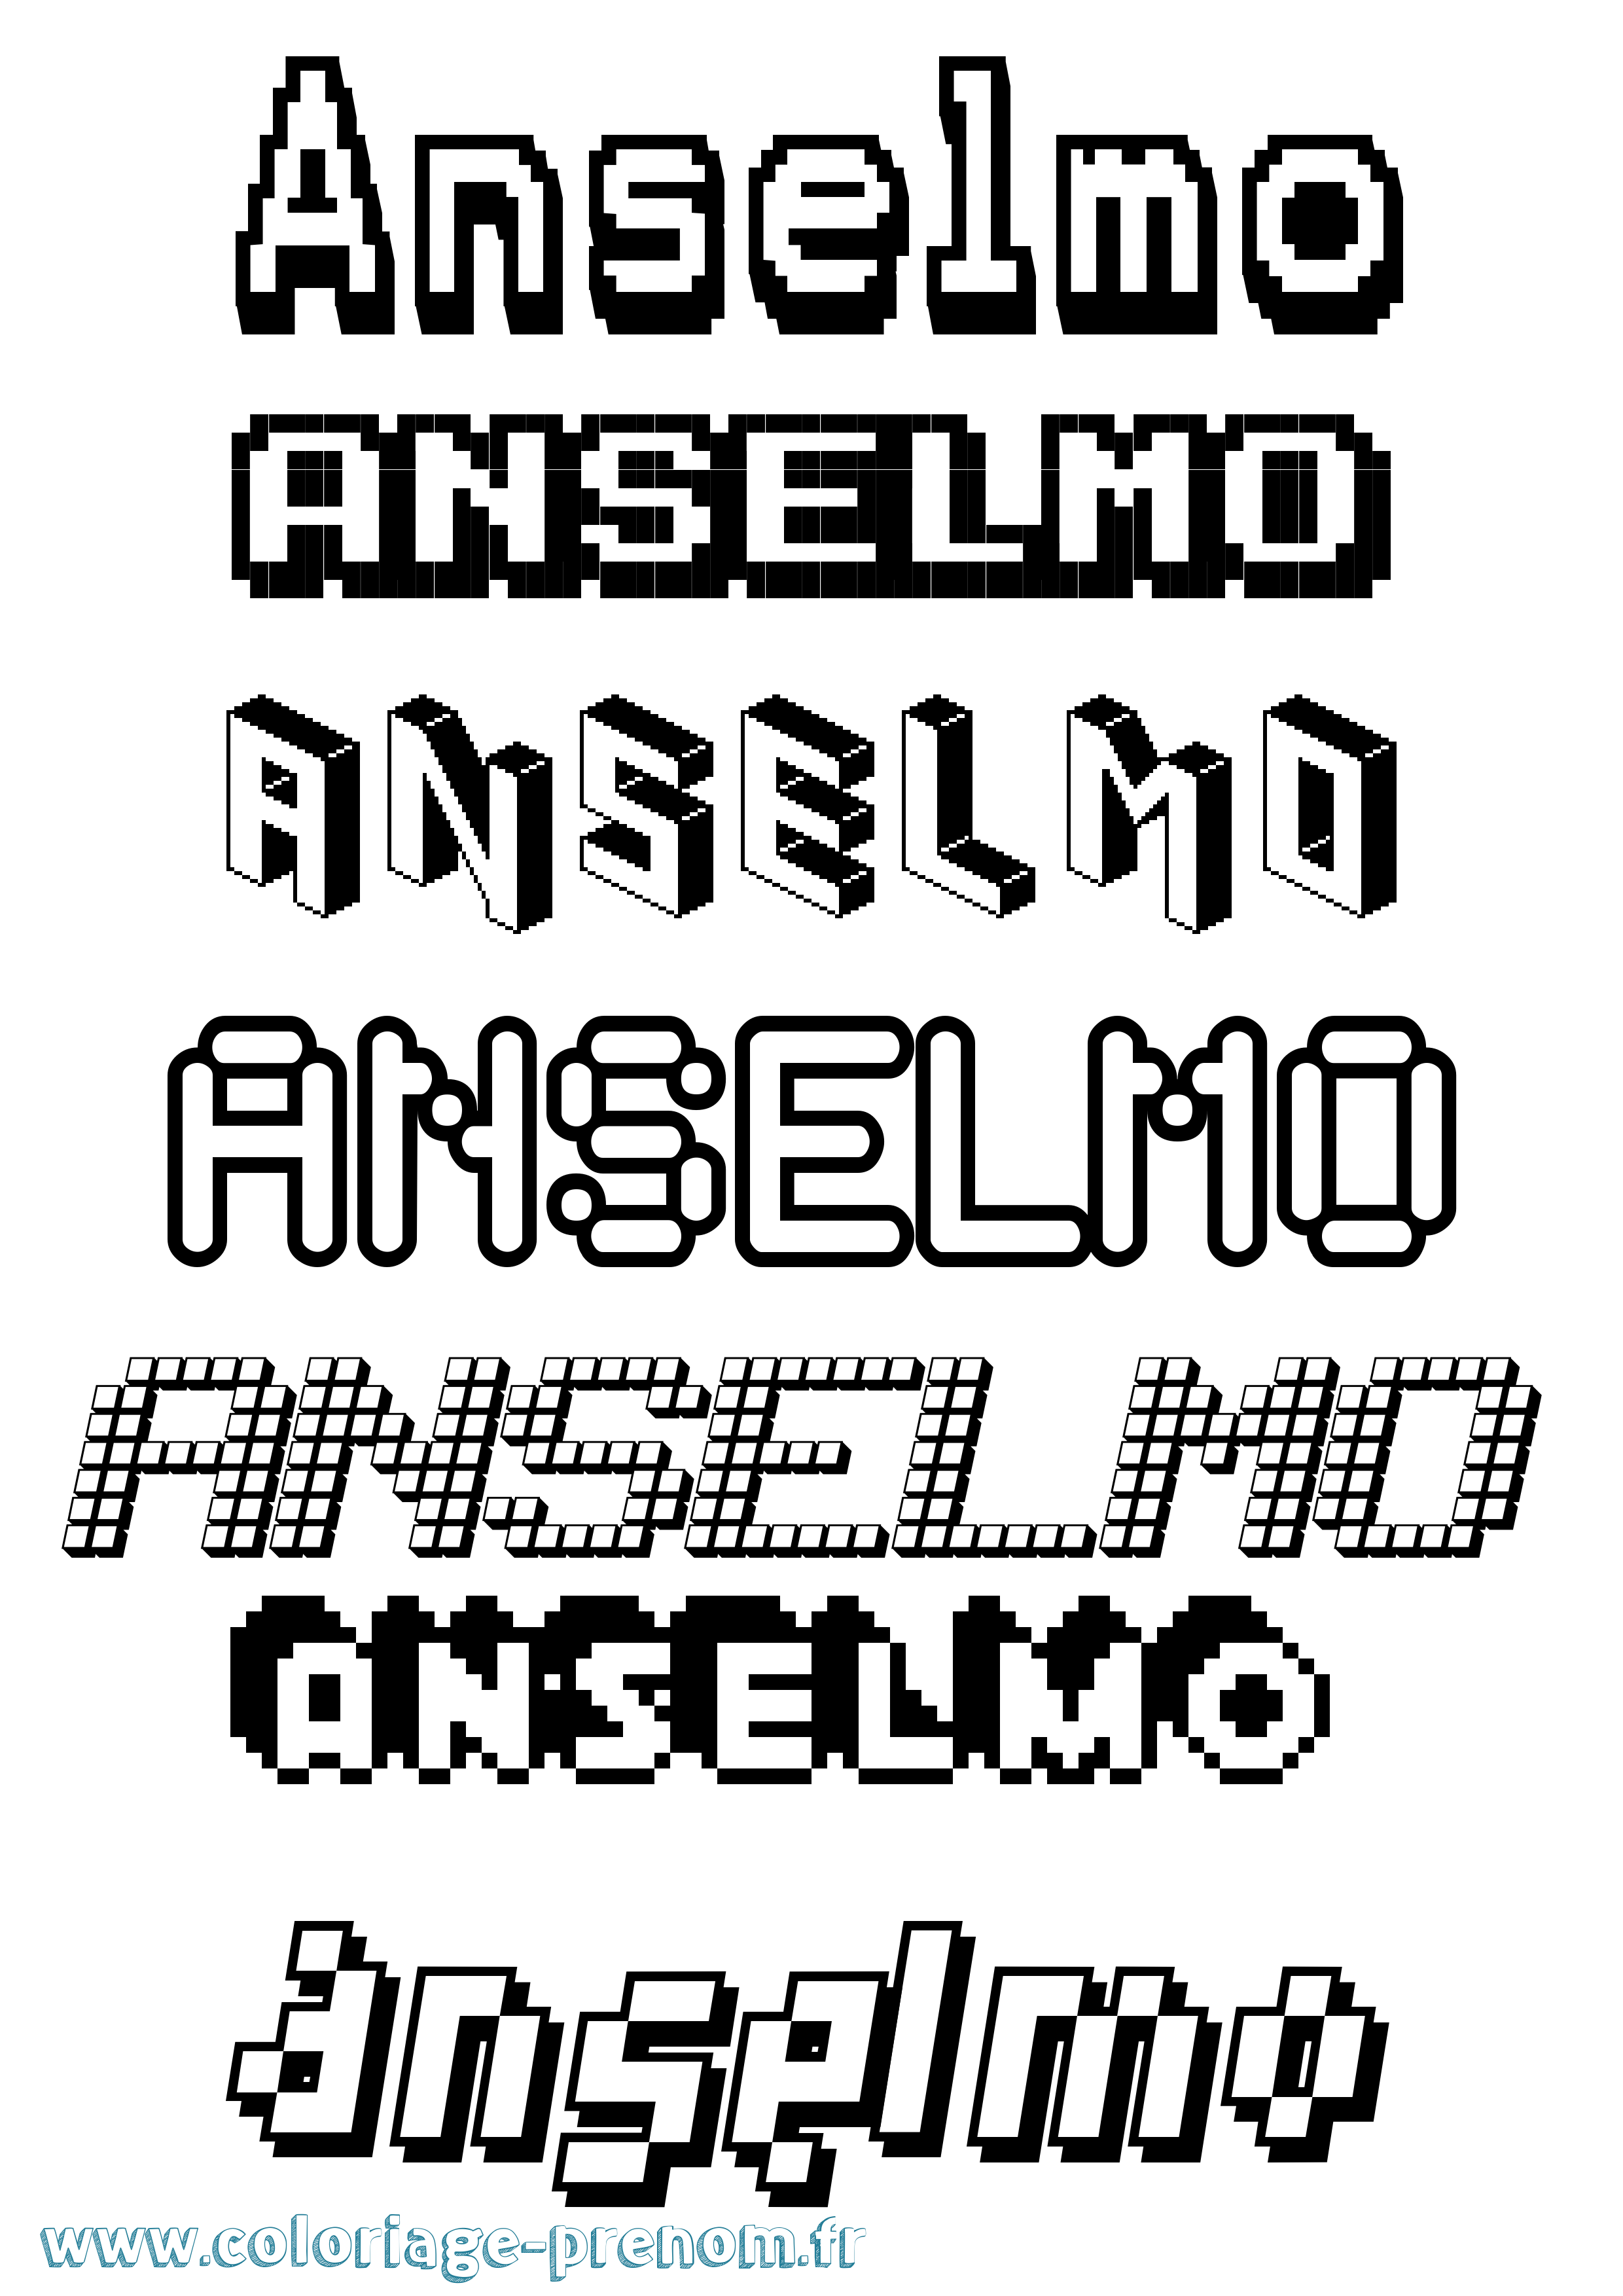 Coloriage prénom Anselmo Pixel